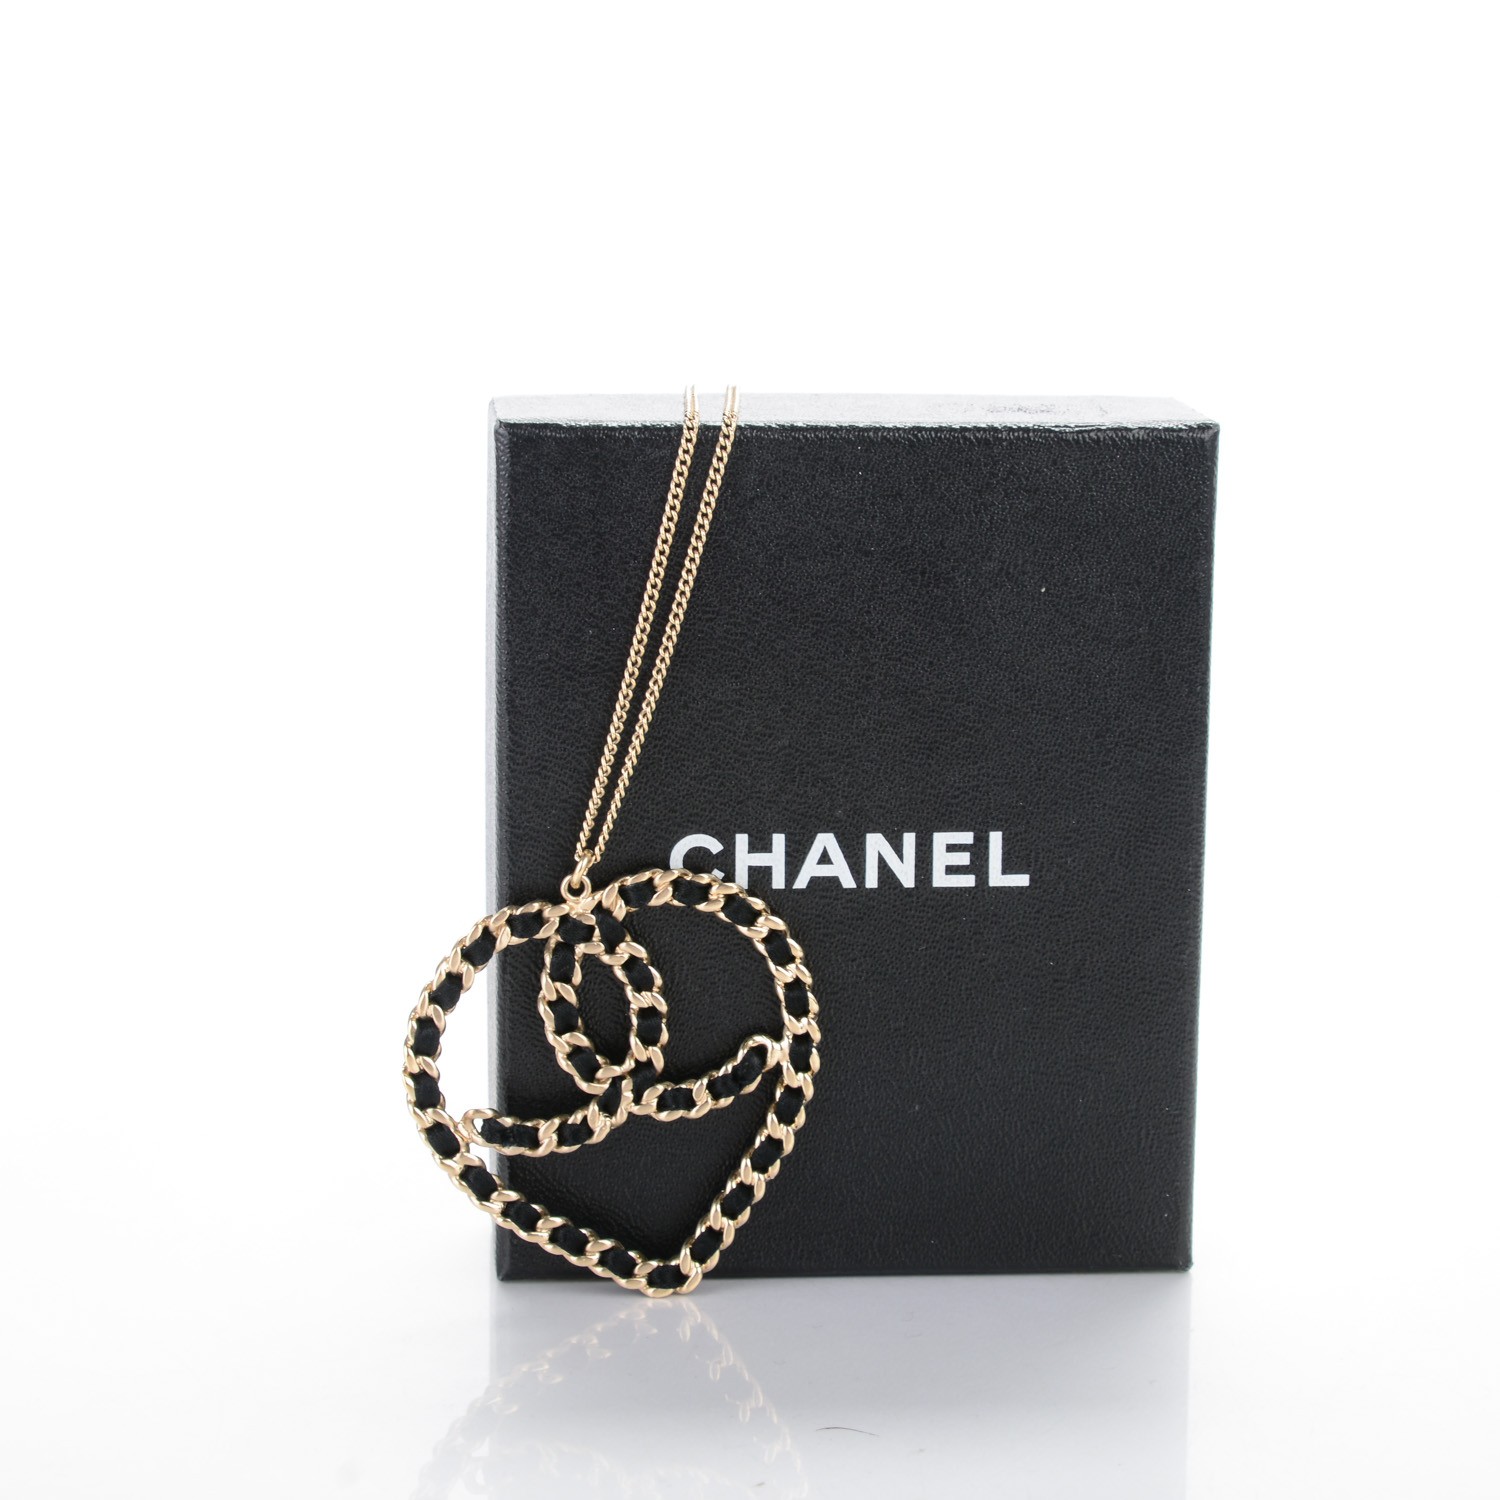 CHANEL Satin CC Heart Chain Necklace Black Light Gold 151237